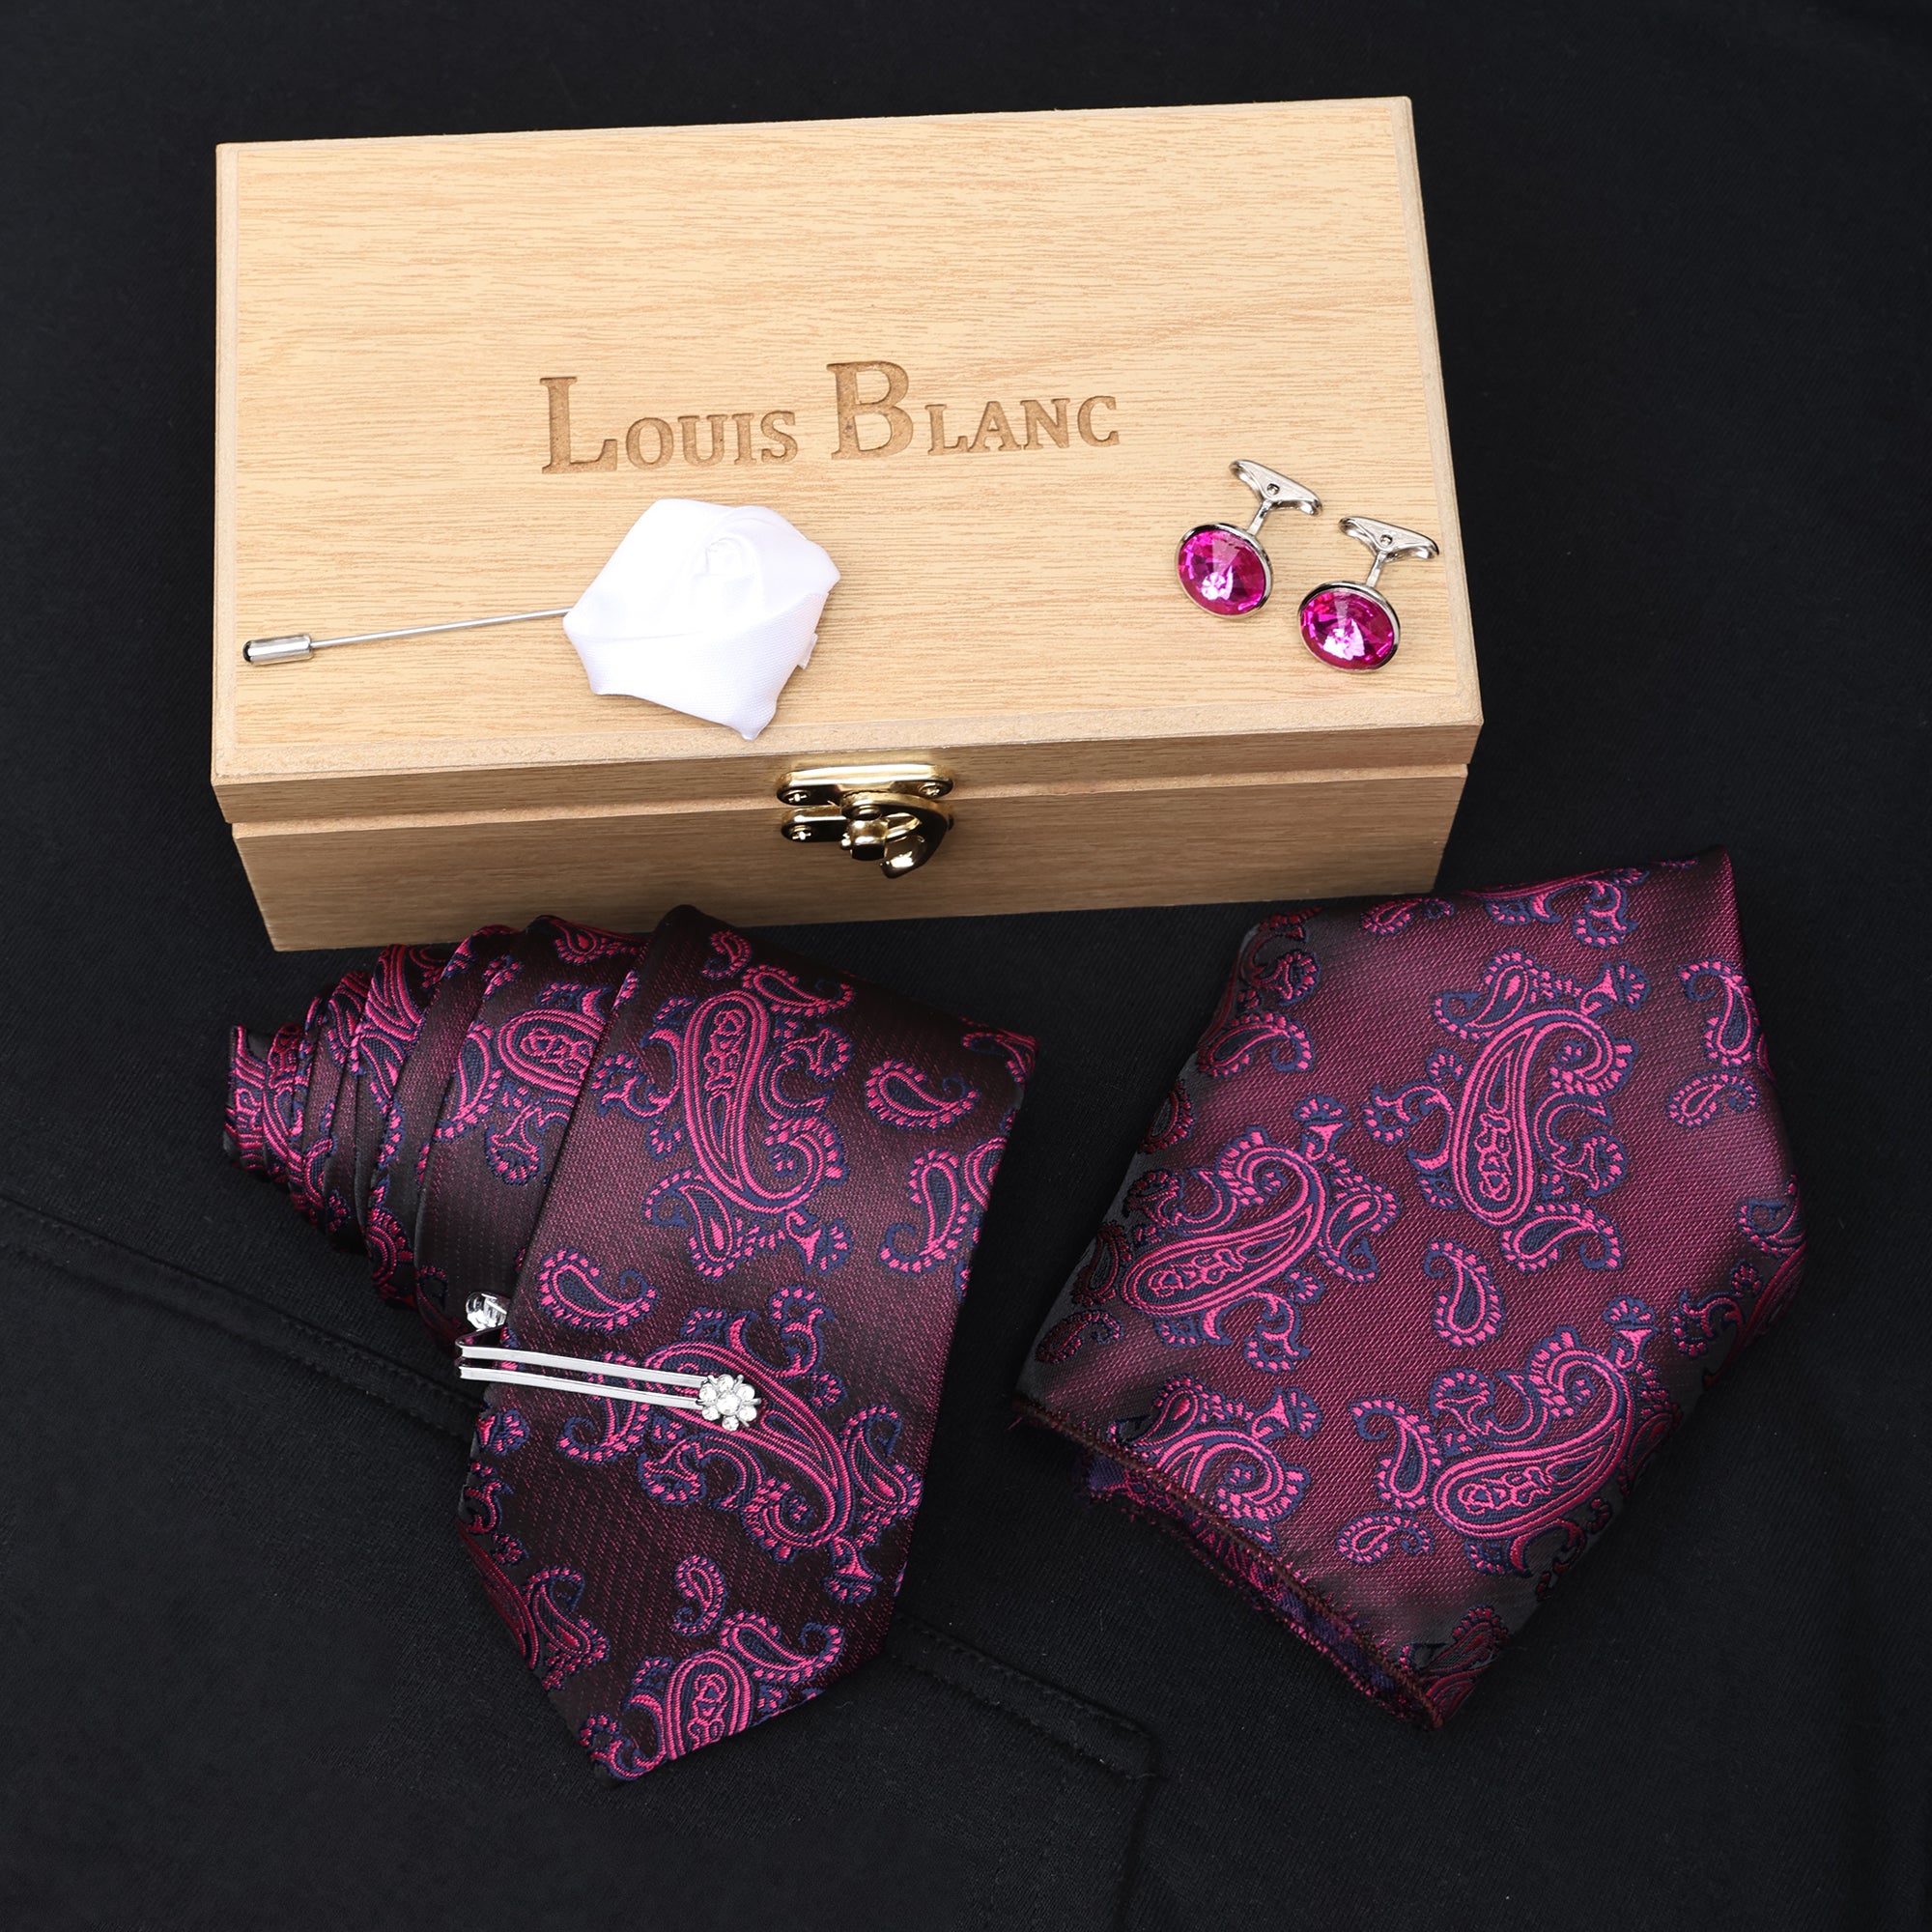 Purple Kari Italian Silk Neckties Set Pocket Square Silver Tiepin